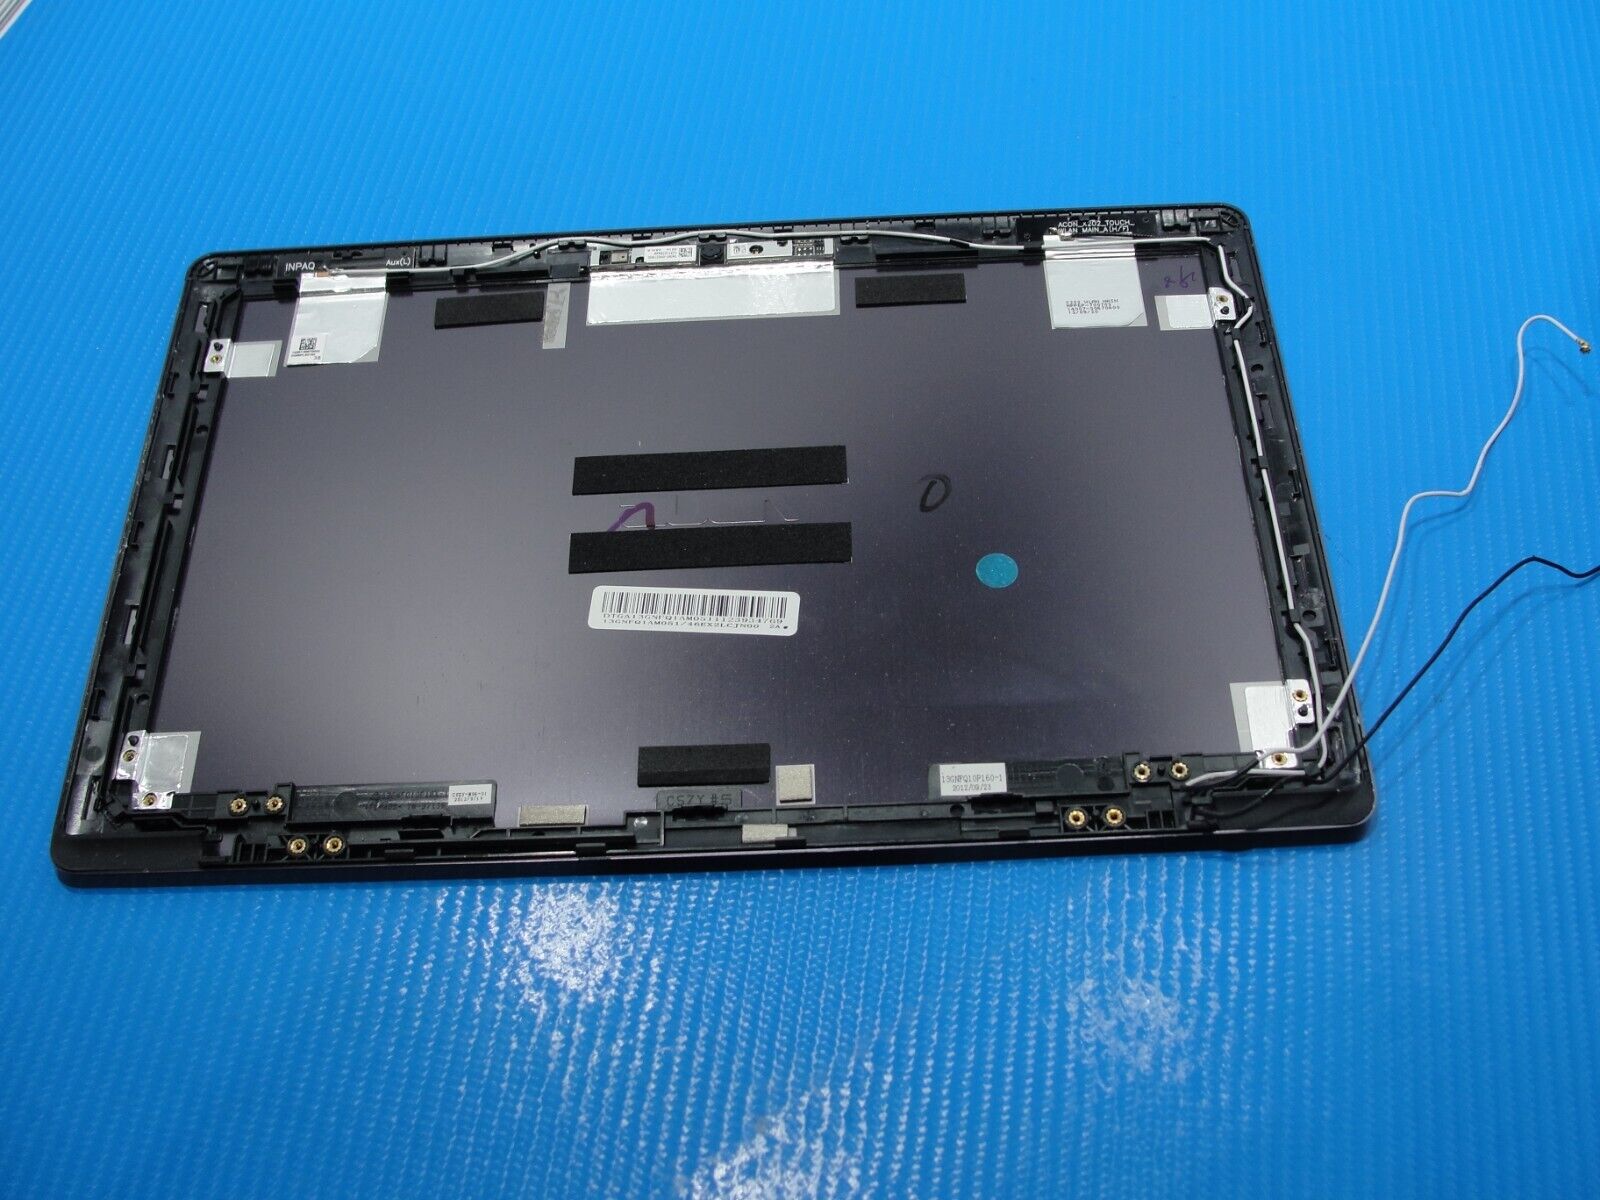 Asus VivoBook X202E-DH31T 11.6